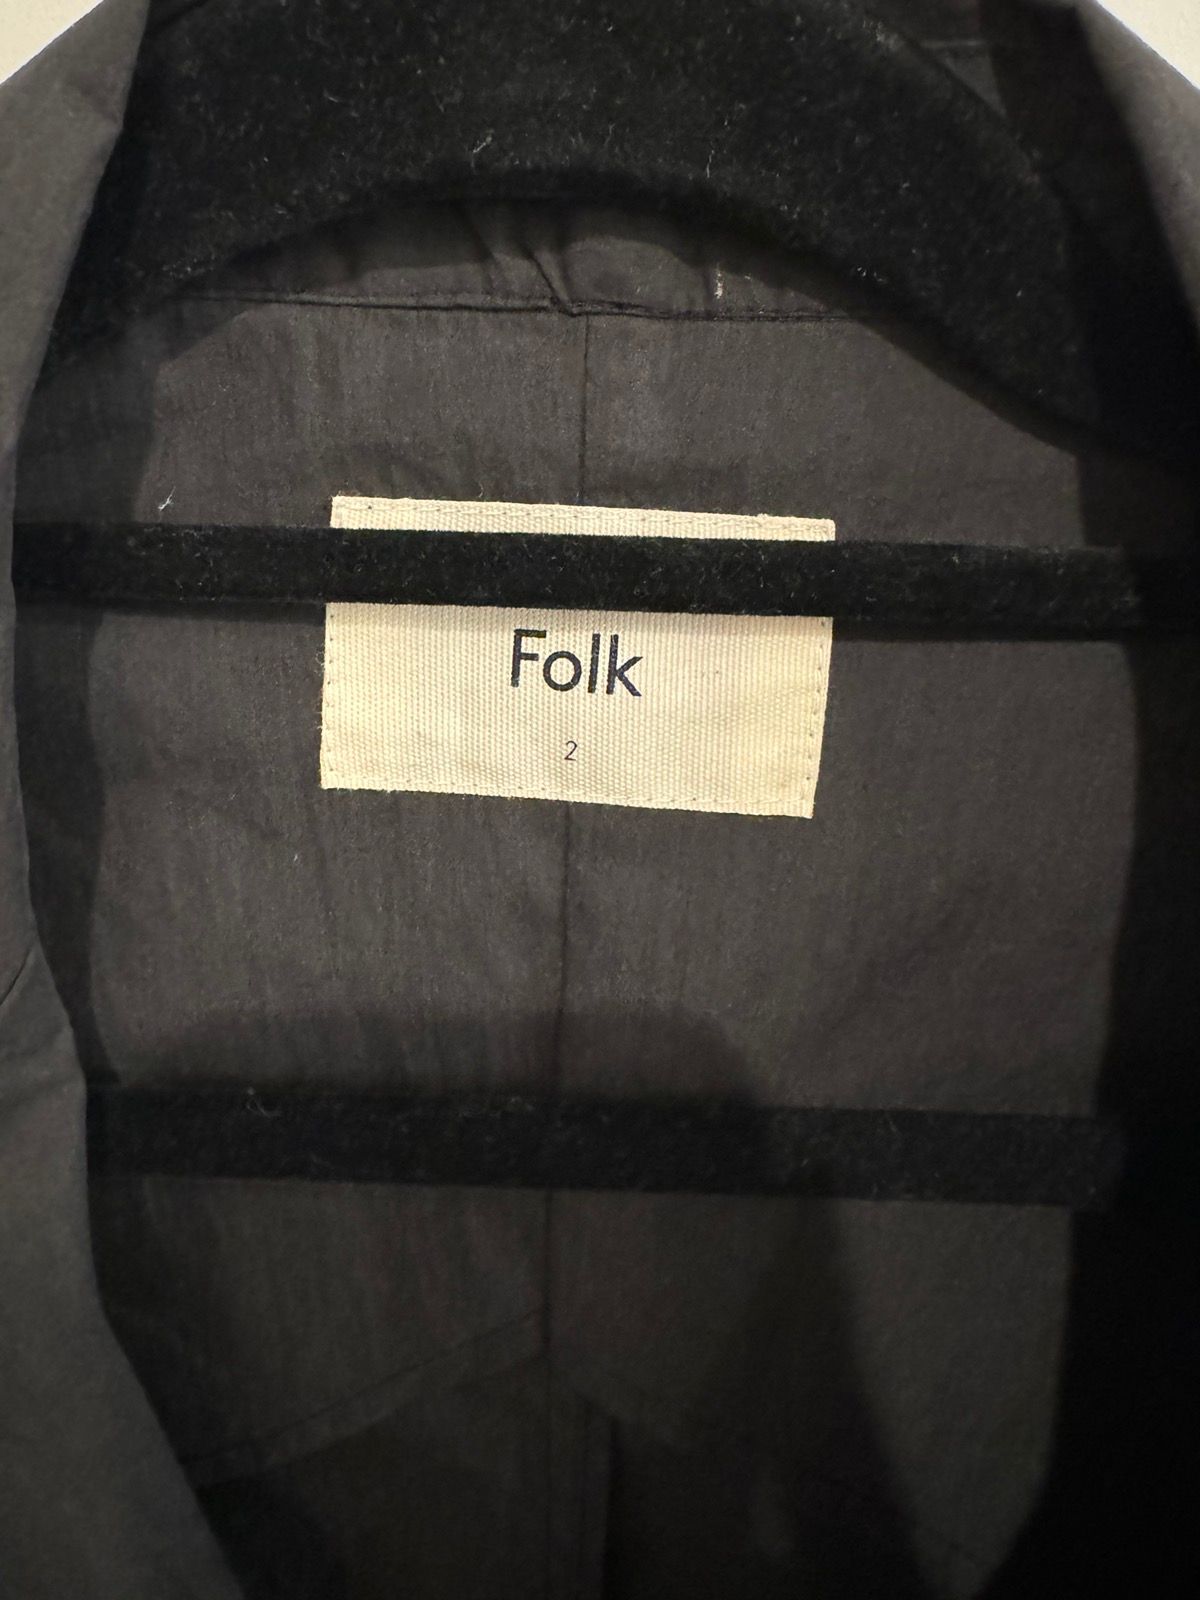 Folk Folk Suit Light Jacket Size US S / EU 44-46 / 1 - 4 Preview